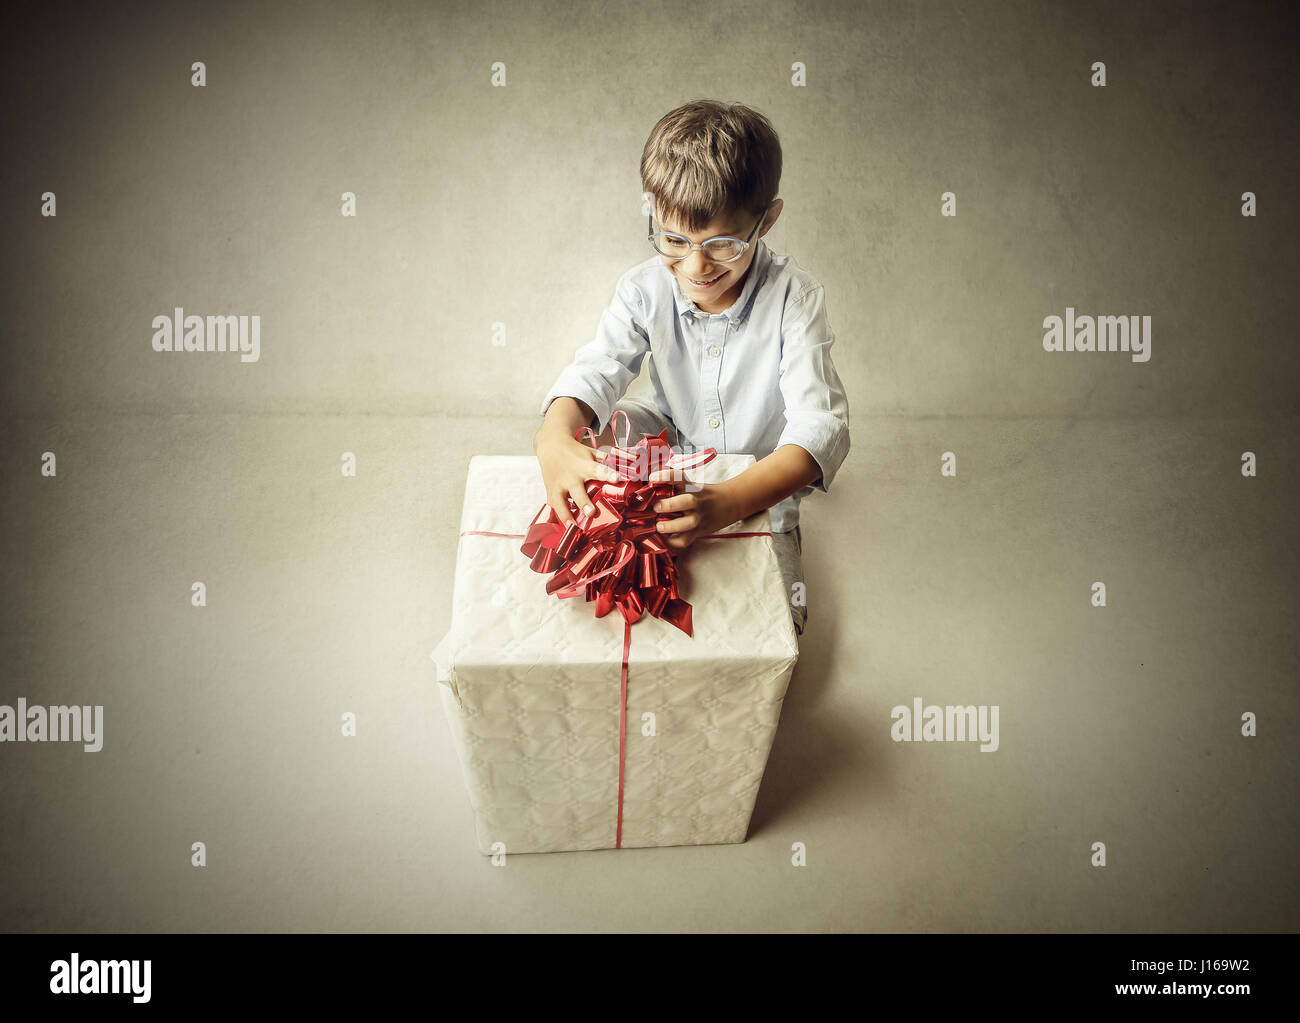 Little boy opening present Stock Photo